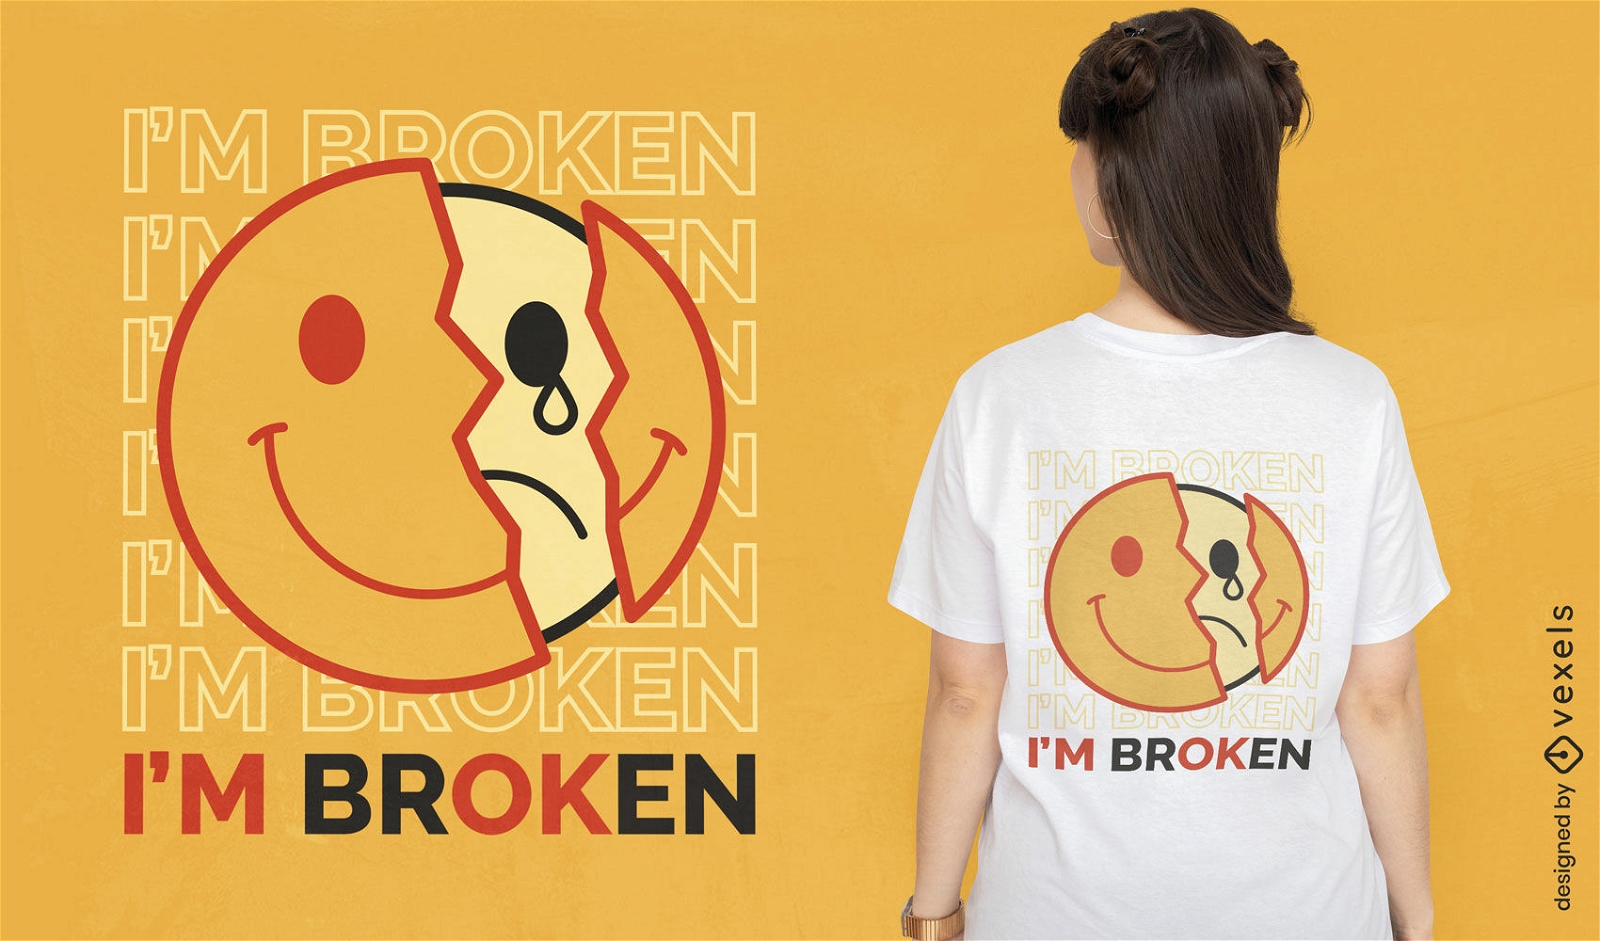 Broken happy face emoji t-shirt design